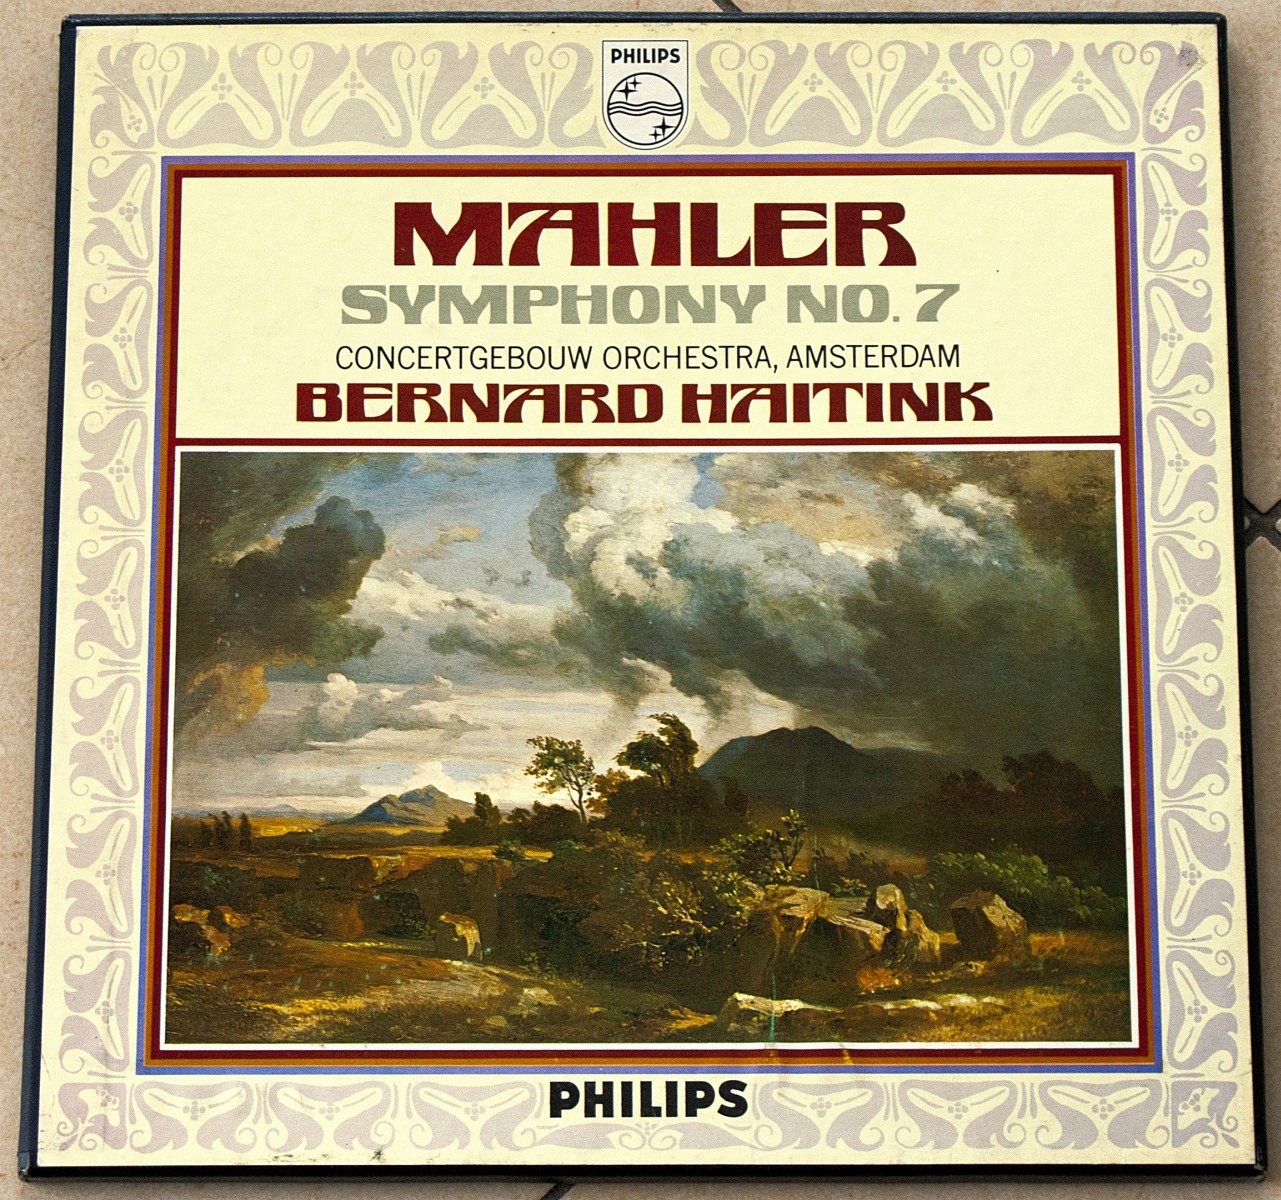 front - Bernard Haitink, Concertgebouw Orchestra Amsterdam - Mahler.jpg